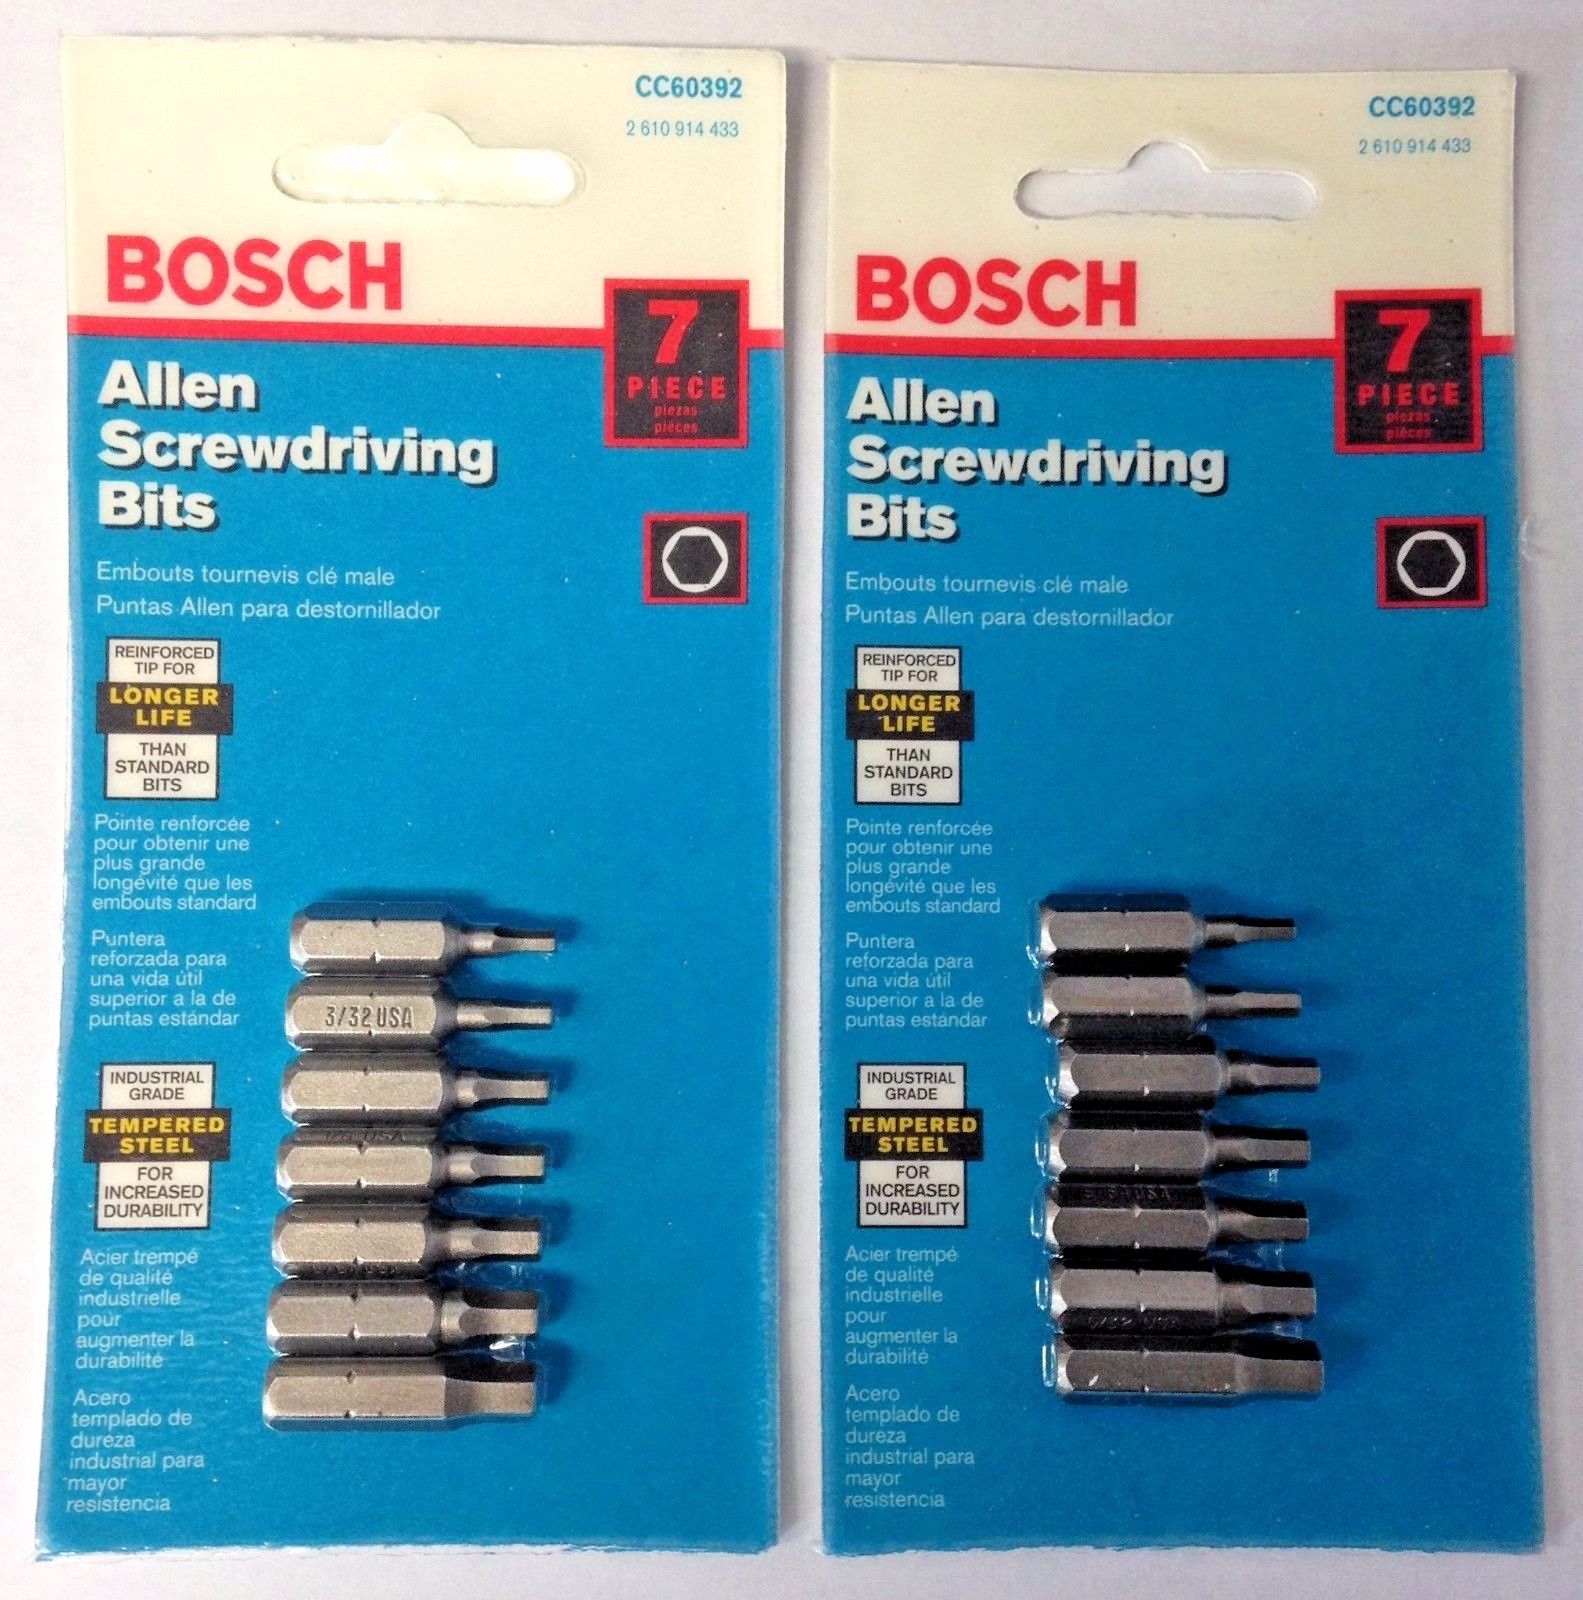 Bosch CC60392 7 Piece Clic‑Change Chuck & Bits Set (Screwdriving Bits)